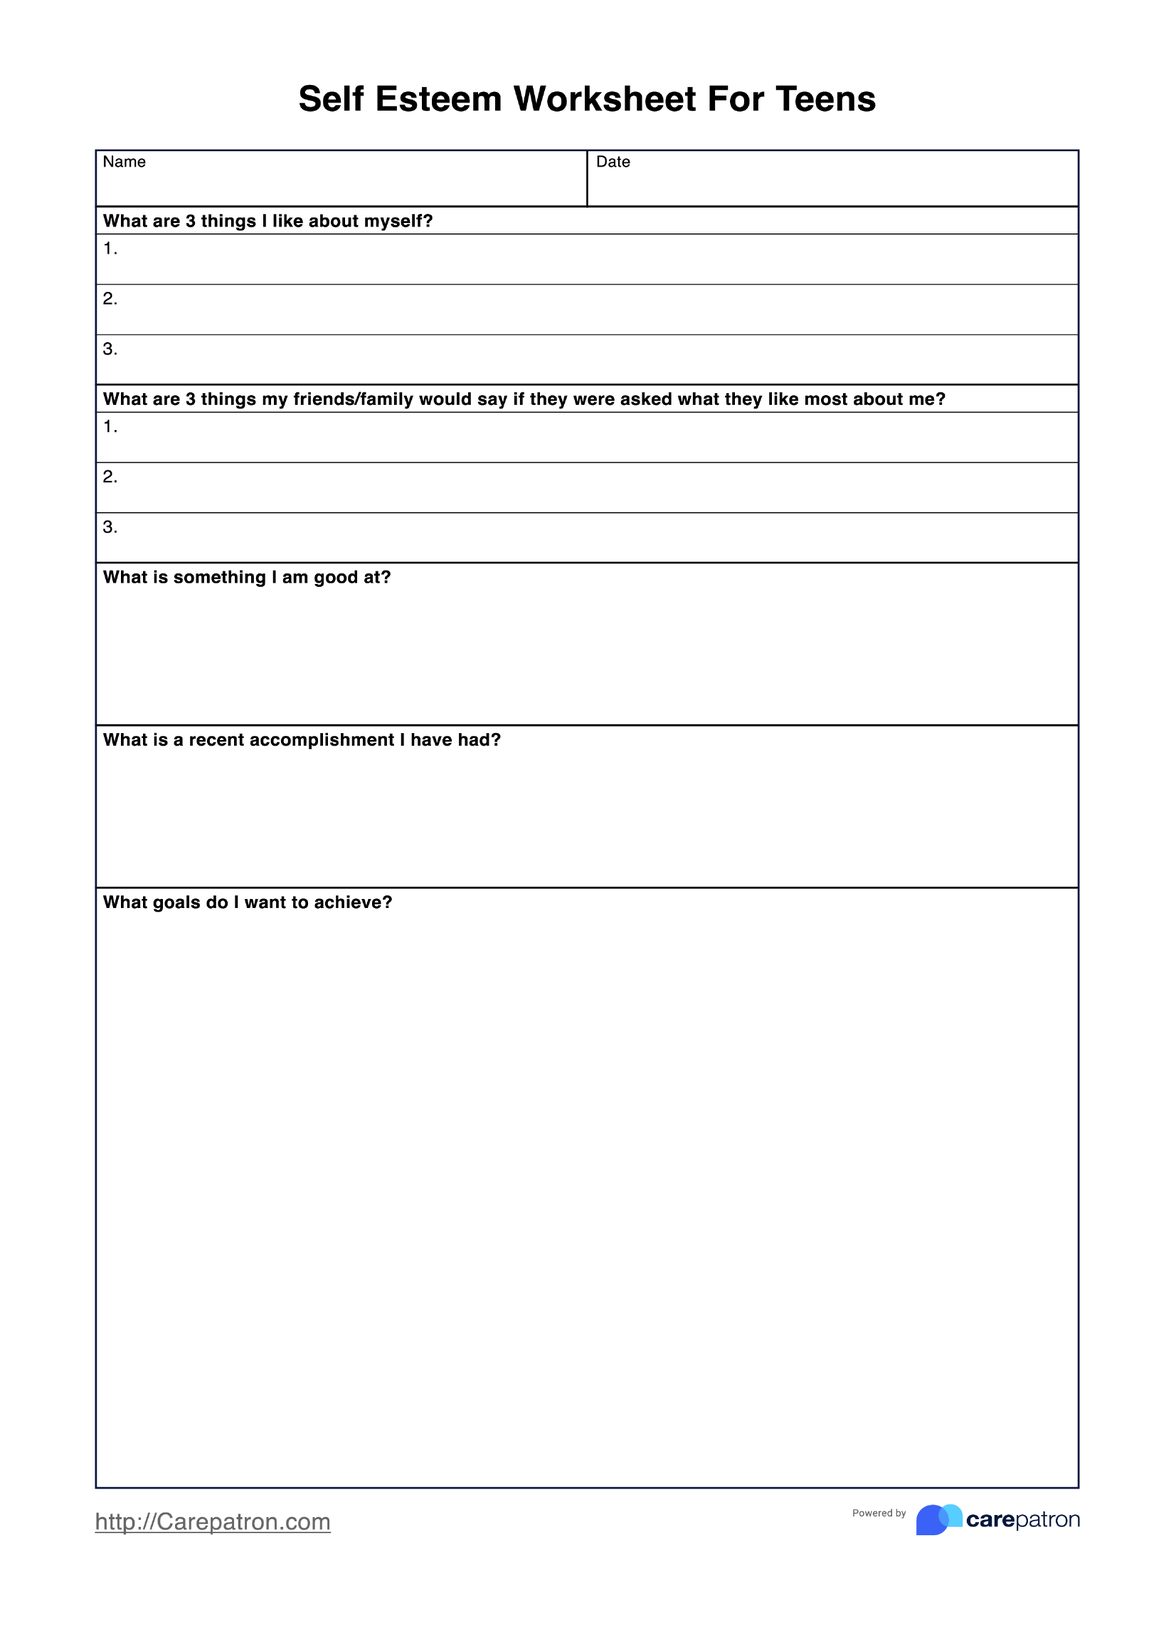 Self Esteem Worksheets For Teens PDF Example